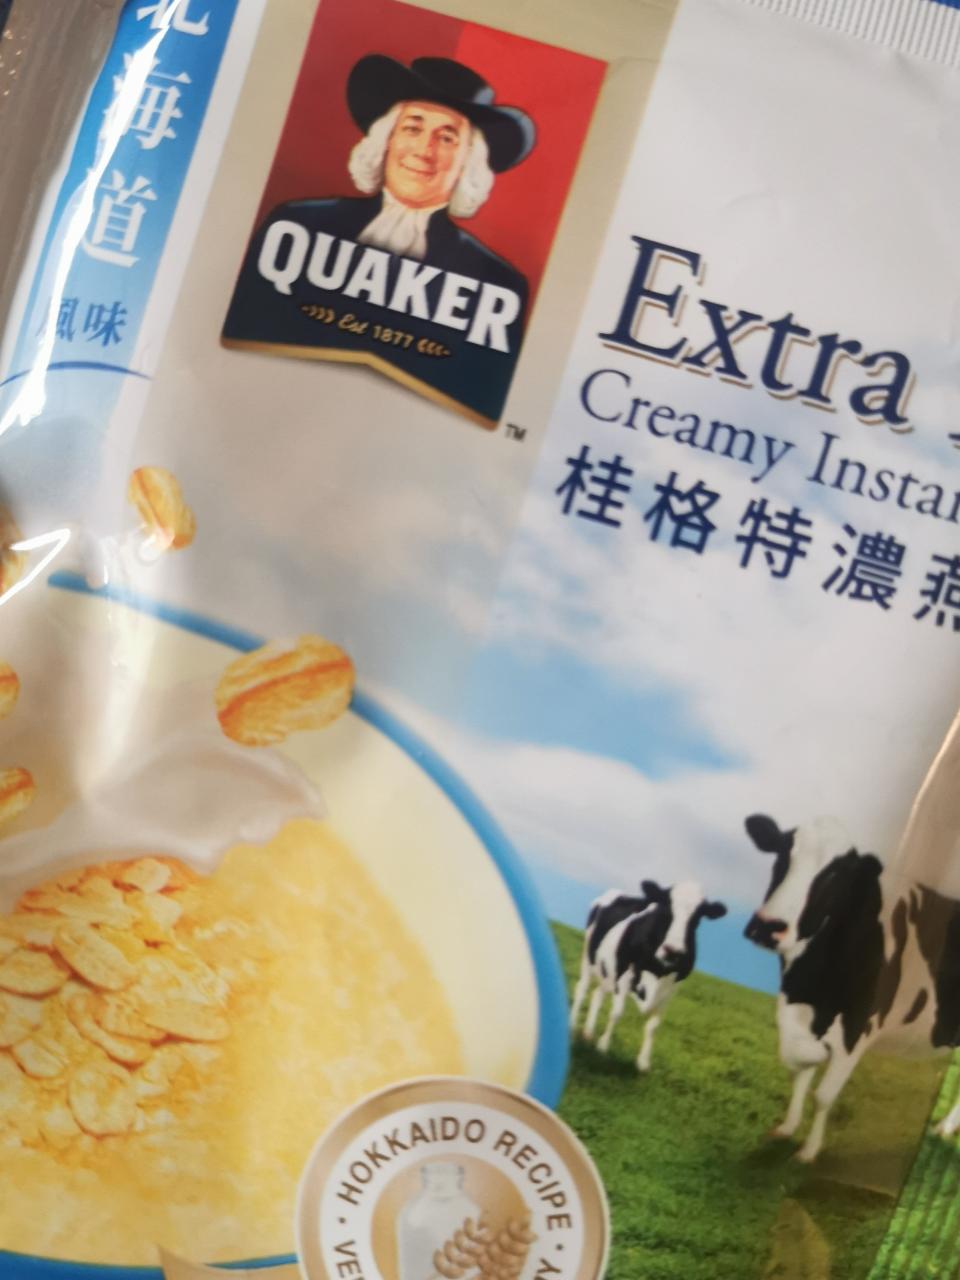 Fotografie - Extra Rich Creamy Instant Cereal Costco Quaker